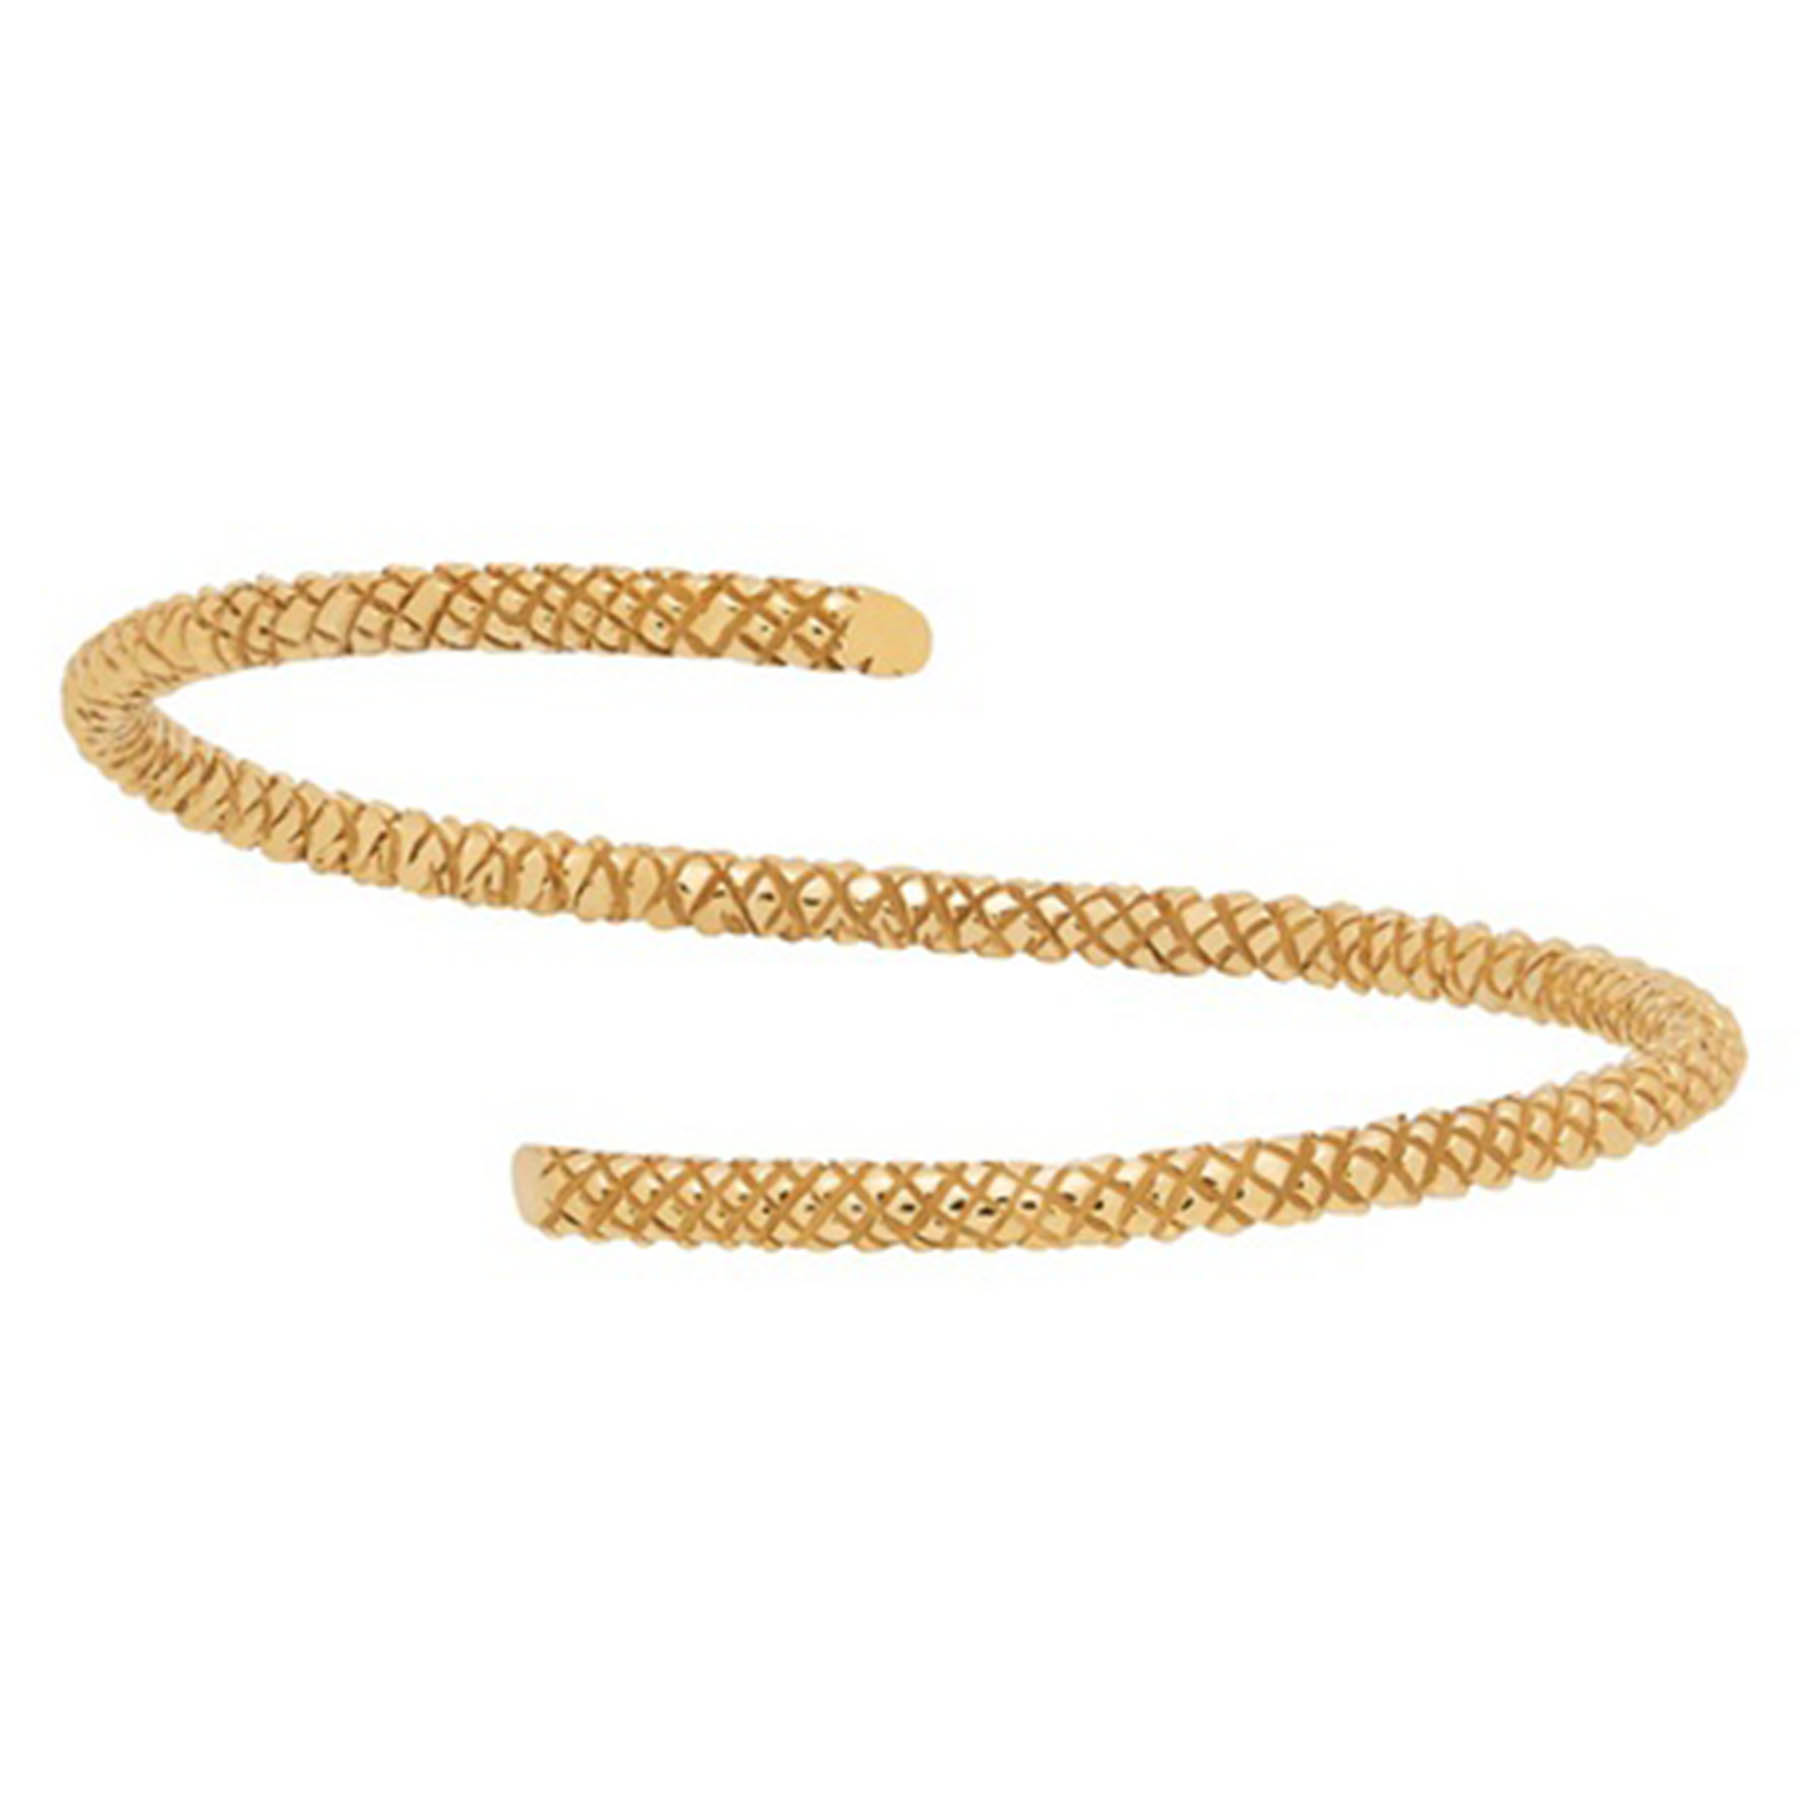 Maria gold bracelet